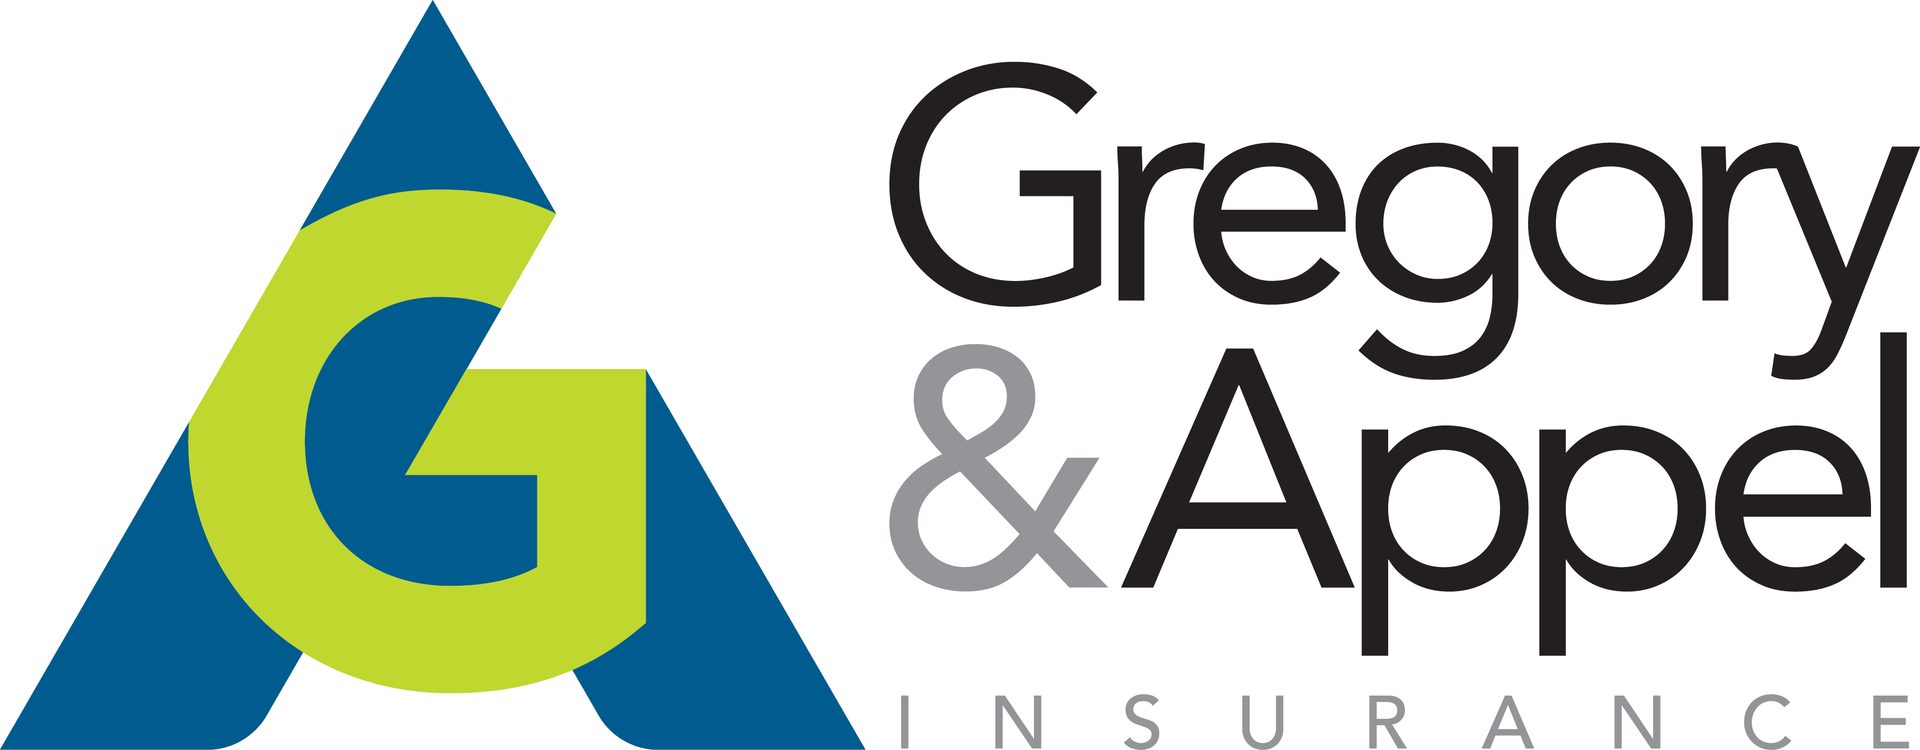 Gregory & Appel Insurance Logo